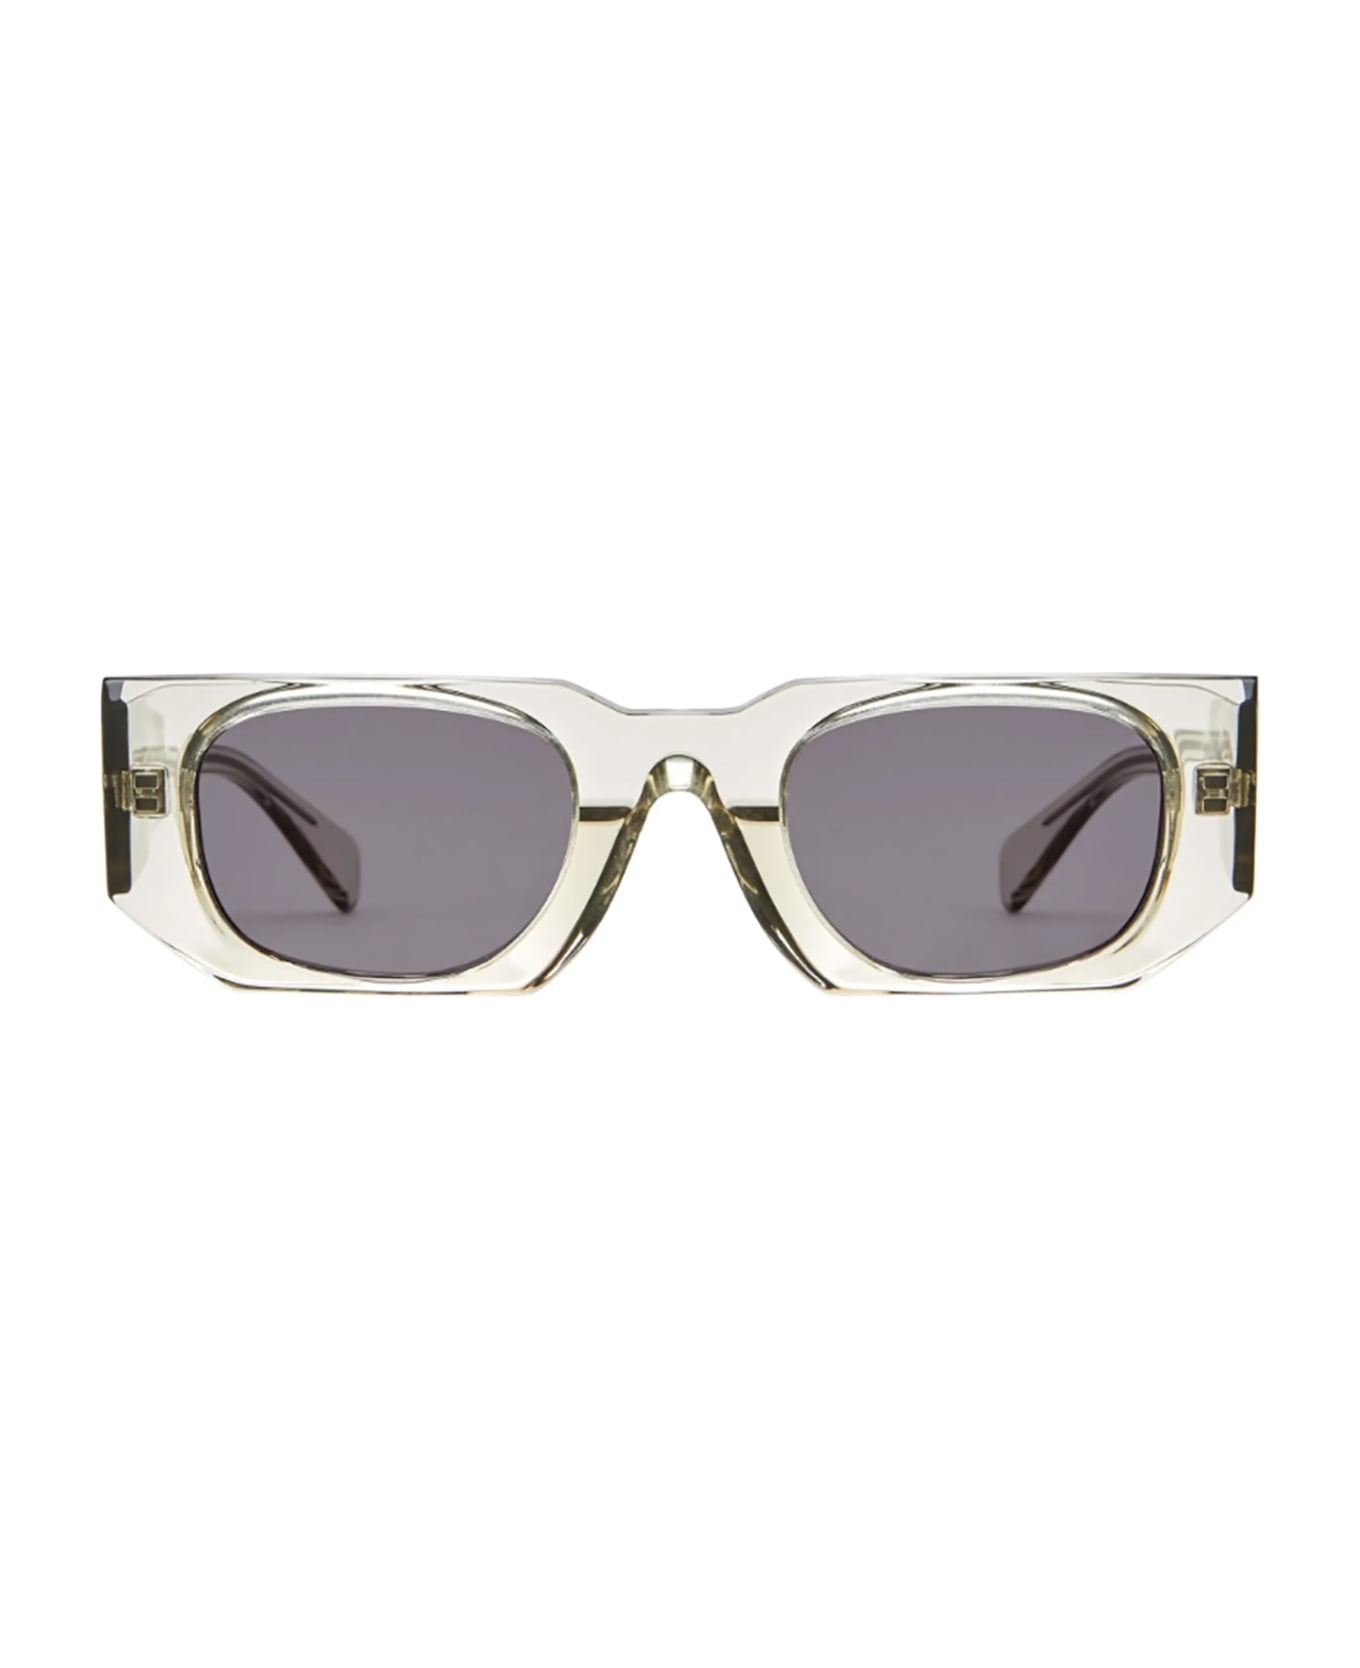 Kuboraum U8 Sunglasses - Tg Grey